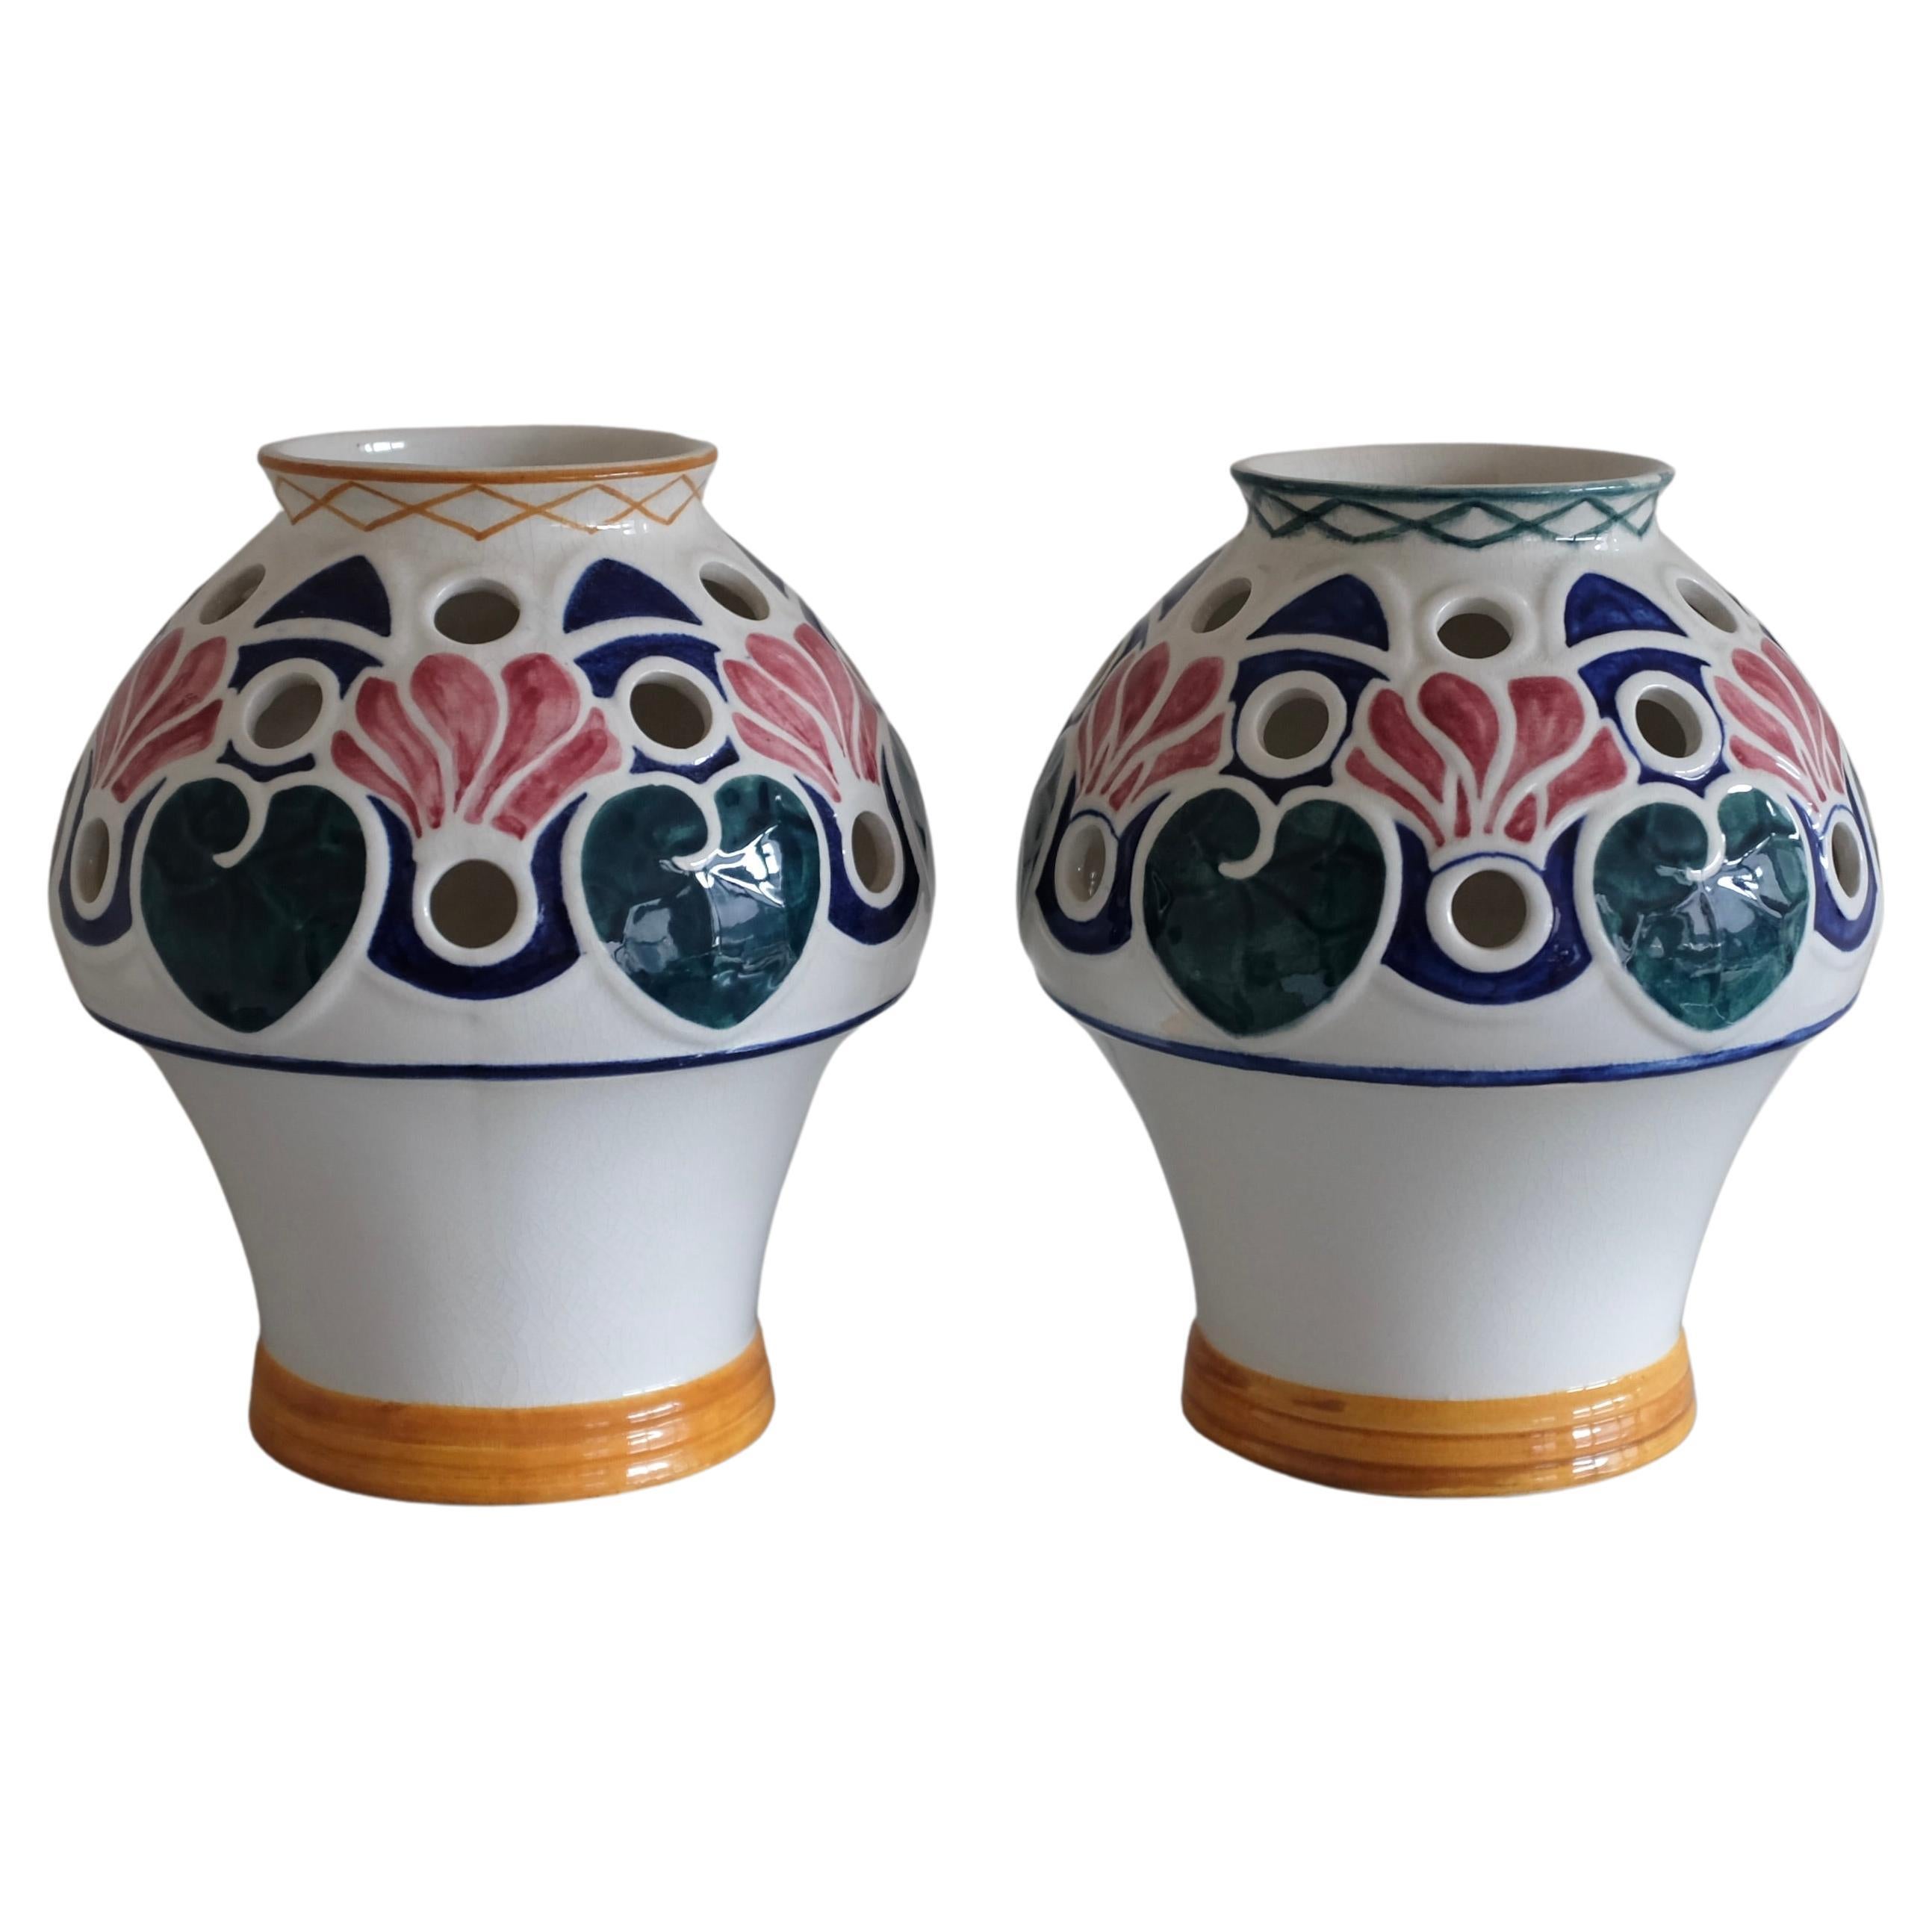 Pair of Early 20th century Ceramic Vases by Alf Wallander